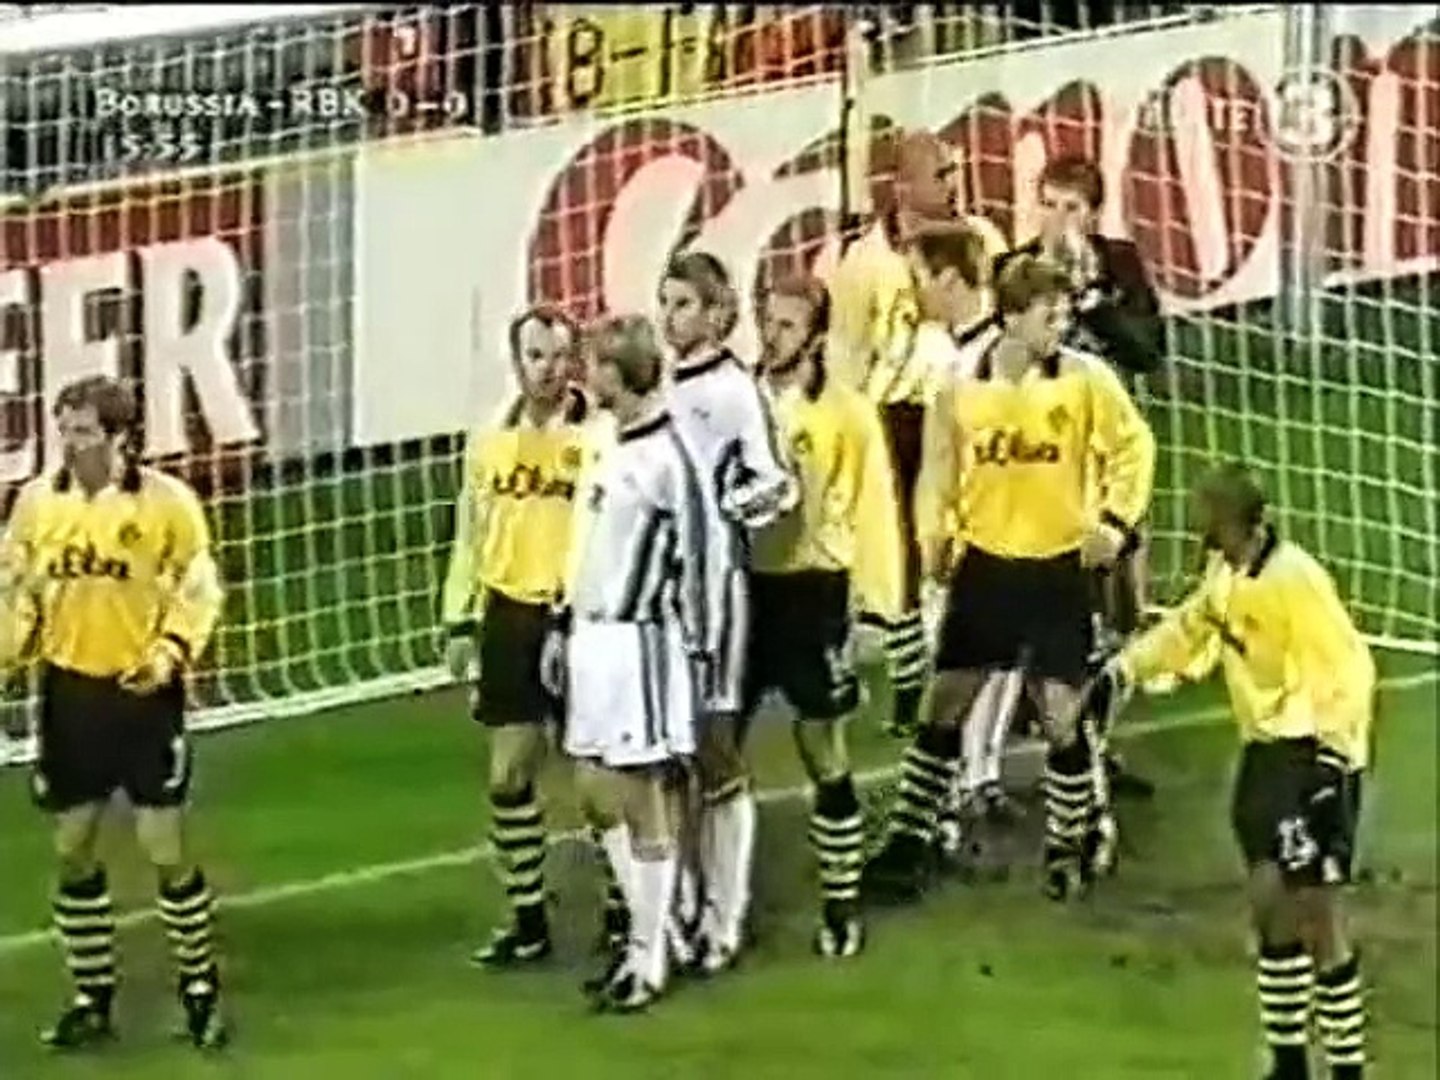 Borussia Dortmund v. Rosenborg 19.10.1999 Champions League 1999/2000  Highlights - video Dailymotion